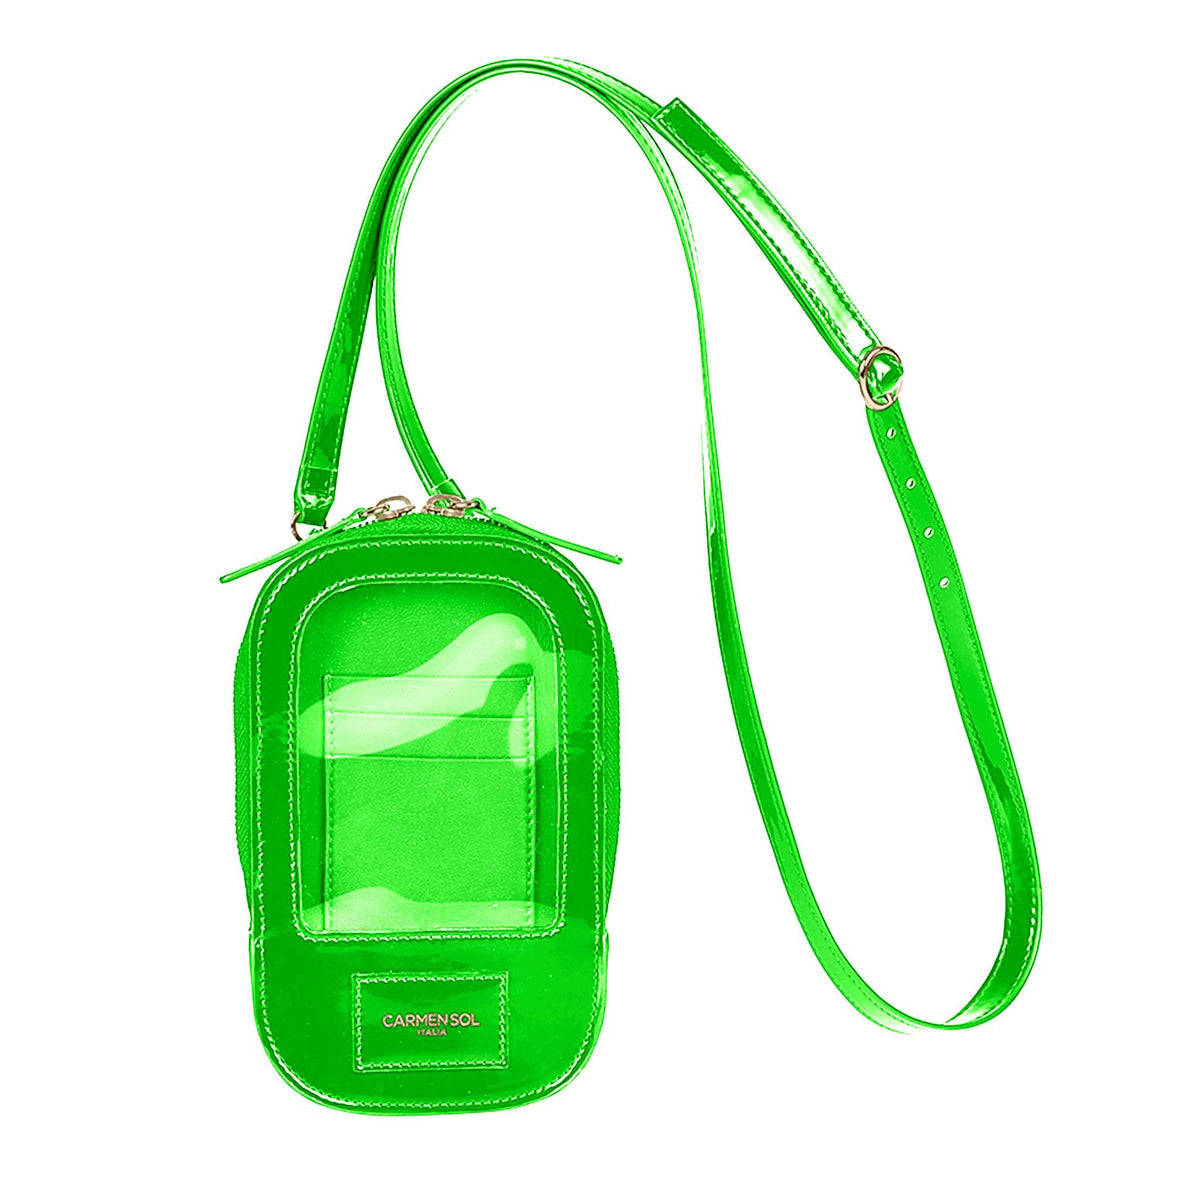 Neon green Gio smartphone holder from Carmen Sol